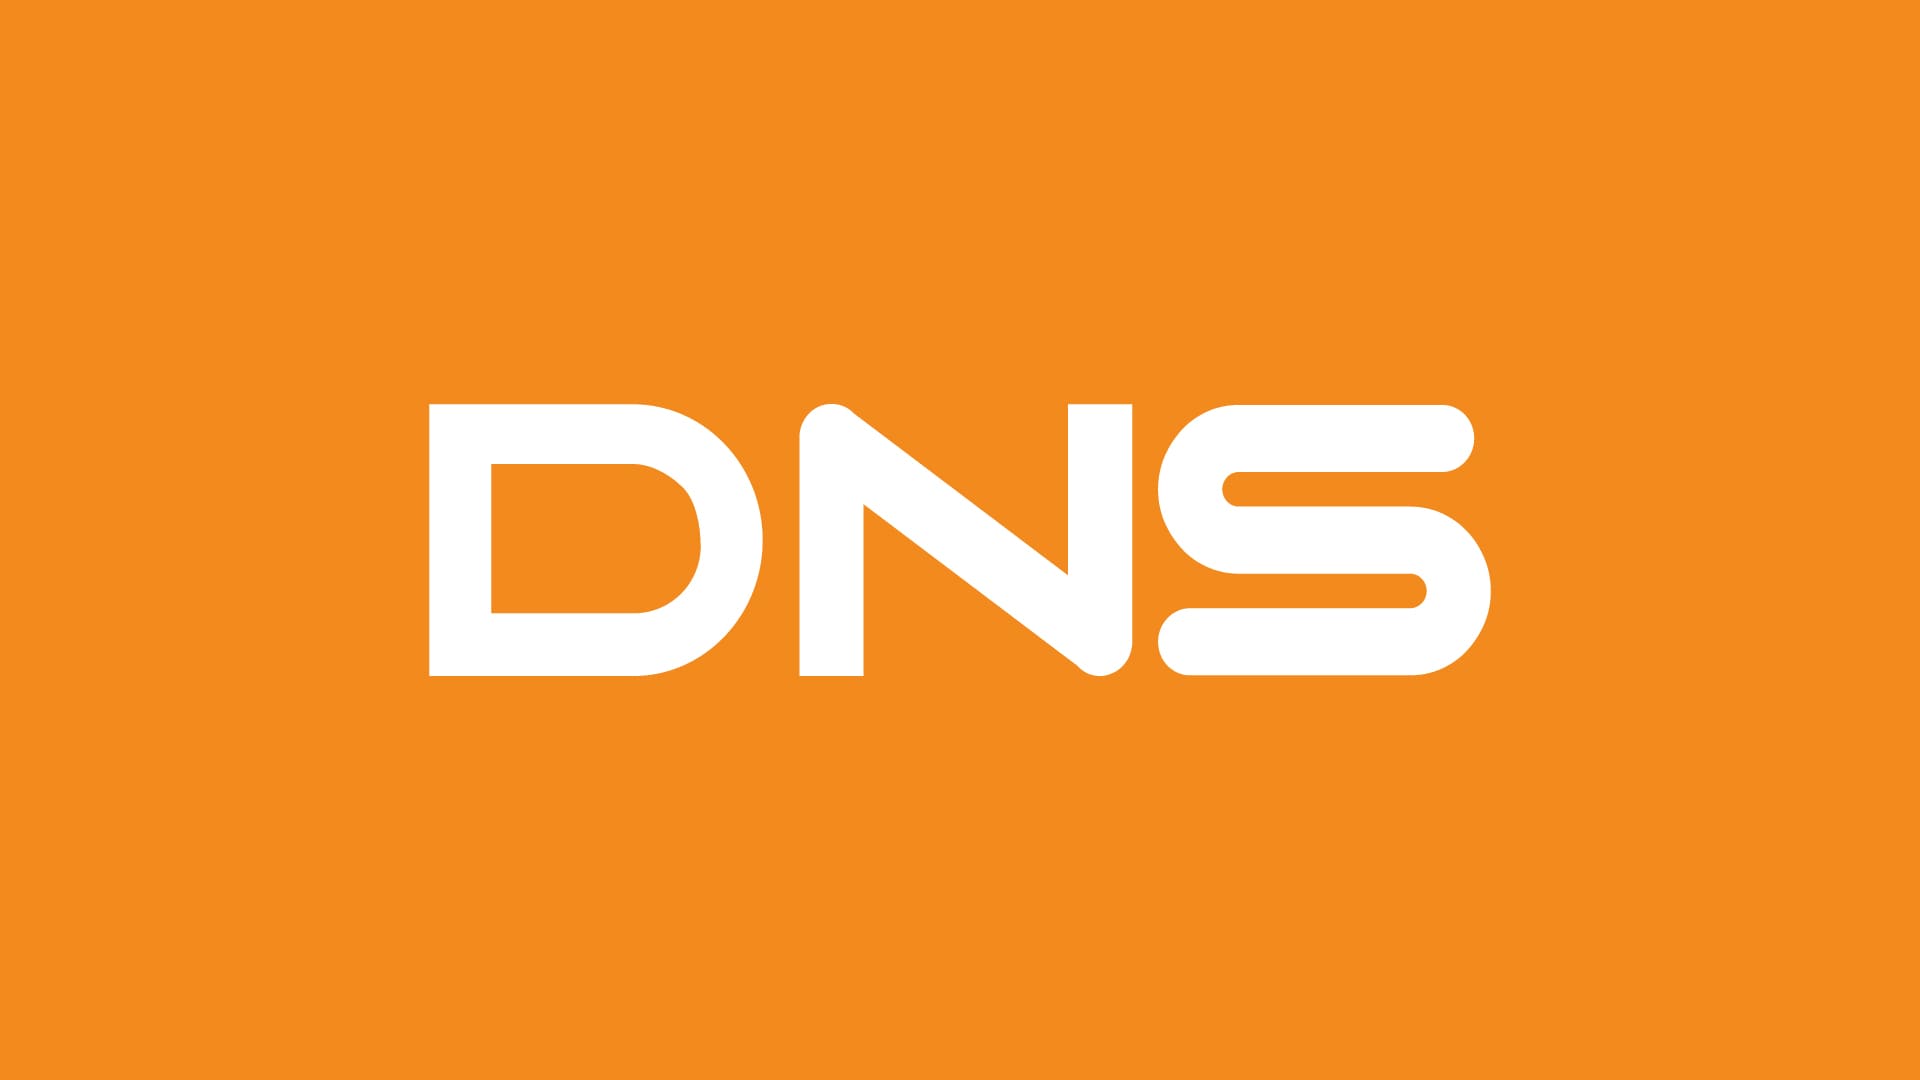 Сайт сети dns. ДНС. DNS эмблема. ДНСЗ. Логотип магазина ДНС.